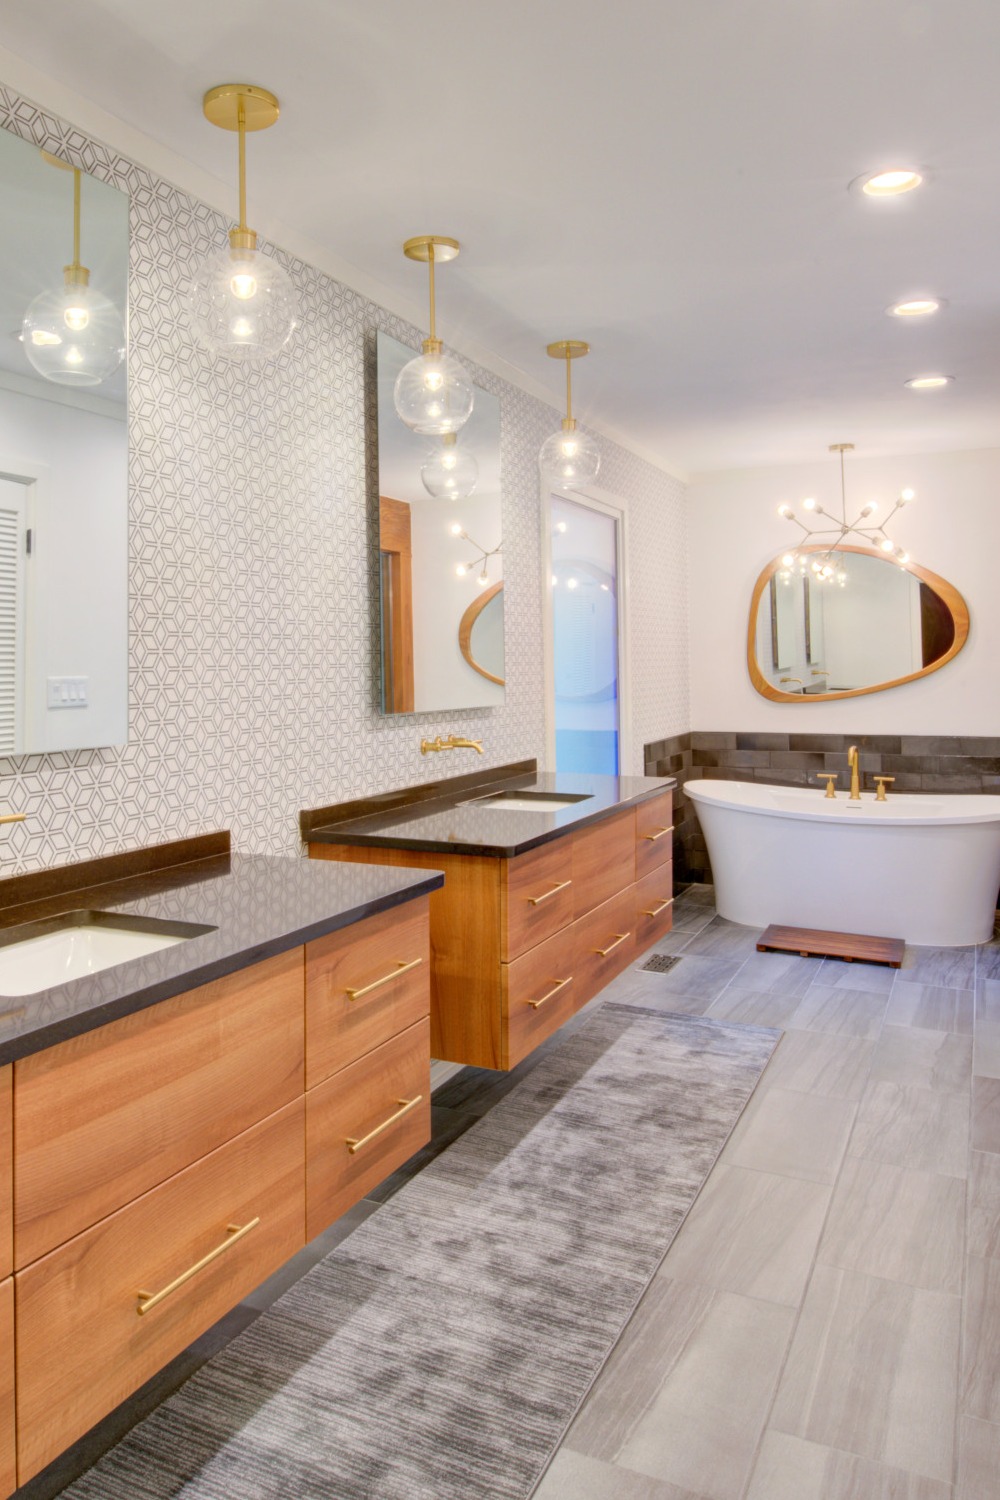 Floating Vanity Bathroom Sink Wall Room Wood Tile Shower Tub Walls Modern Floor Cabinets Cabinet Contemporary Gray Large